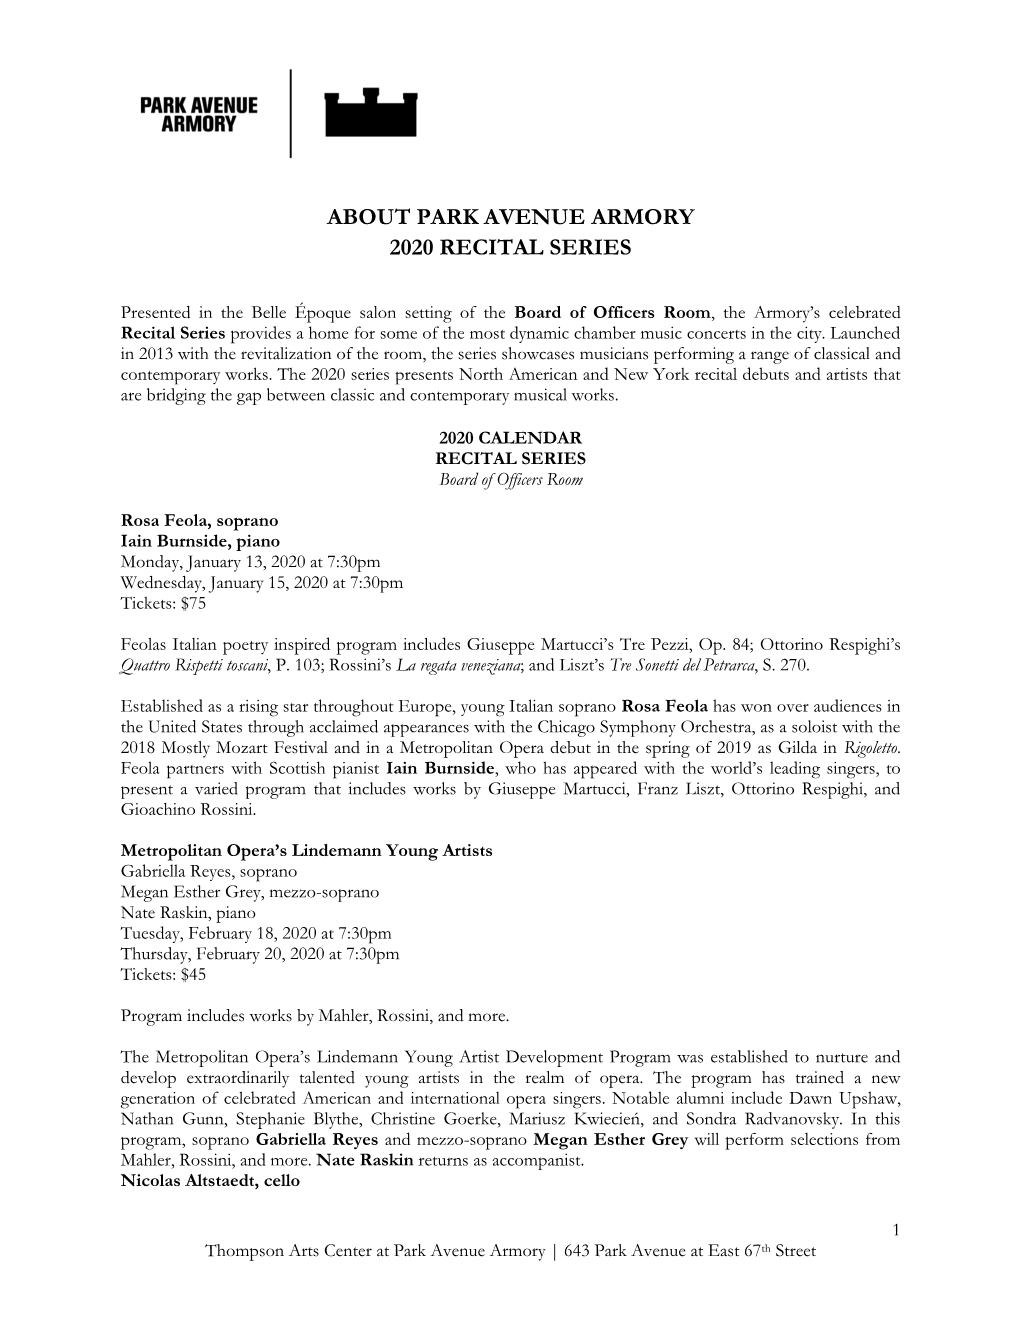 About Park Avenue Armory 2020 Recital Series